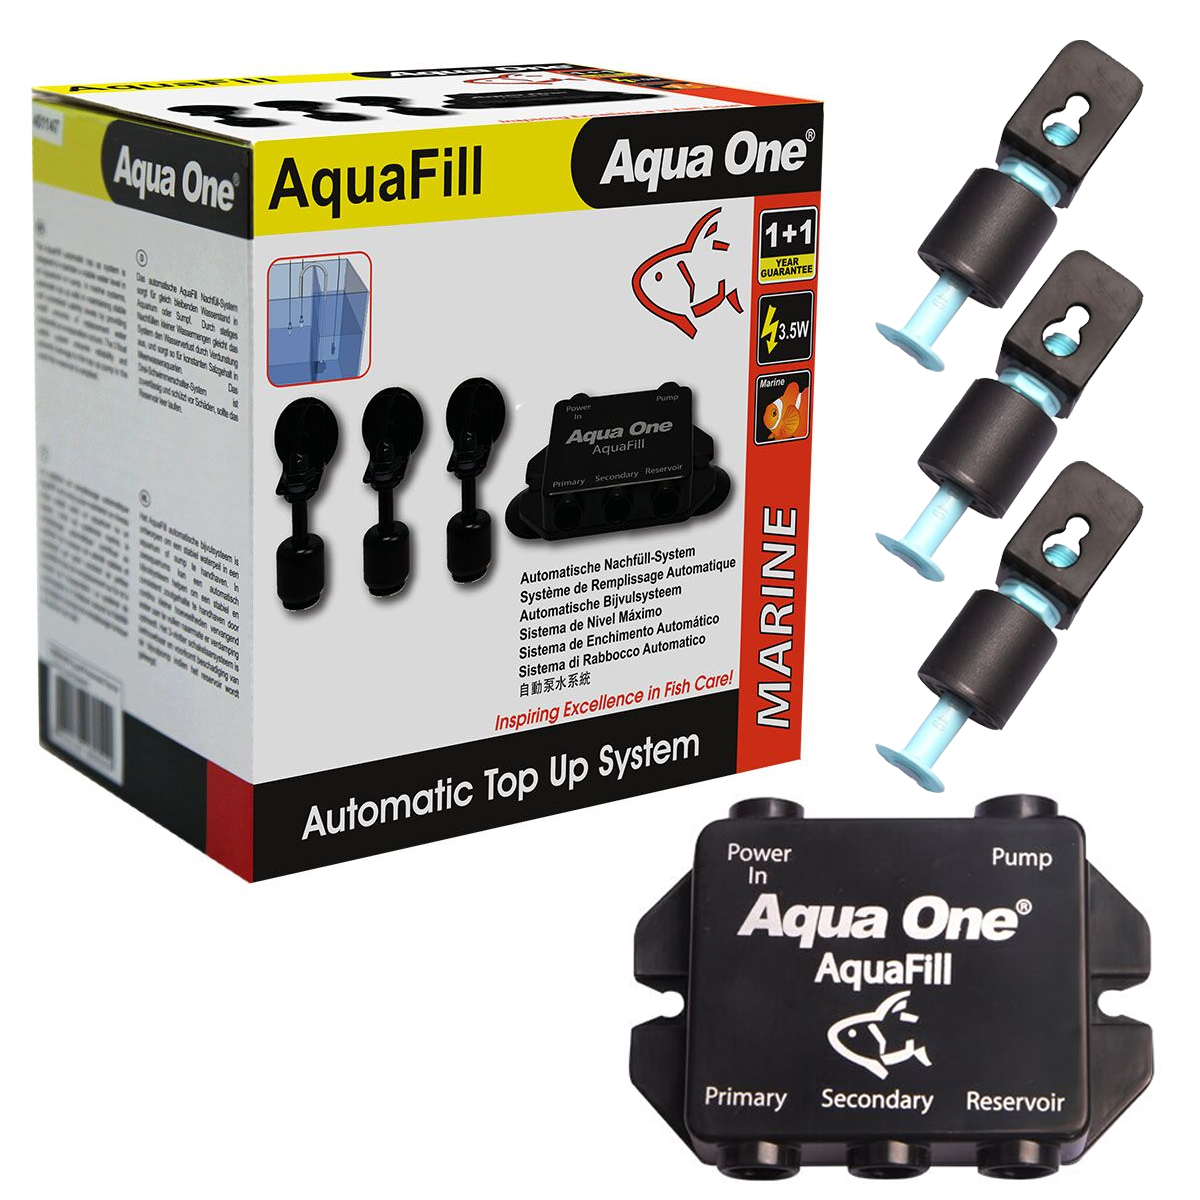 Aqua One Aquafill Automatic Top Up System 